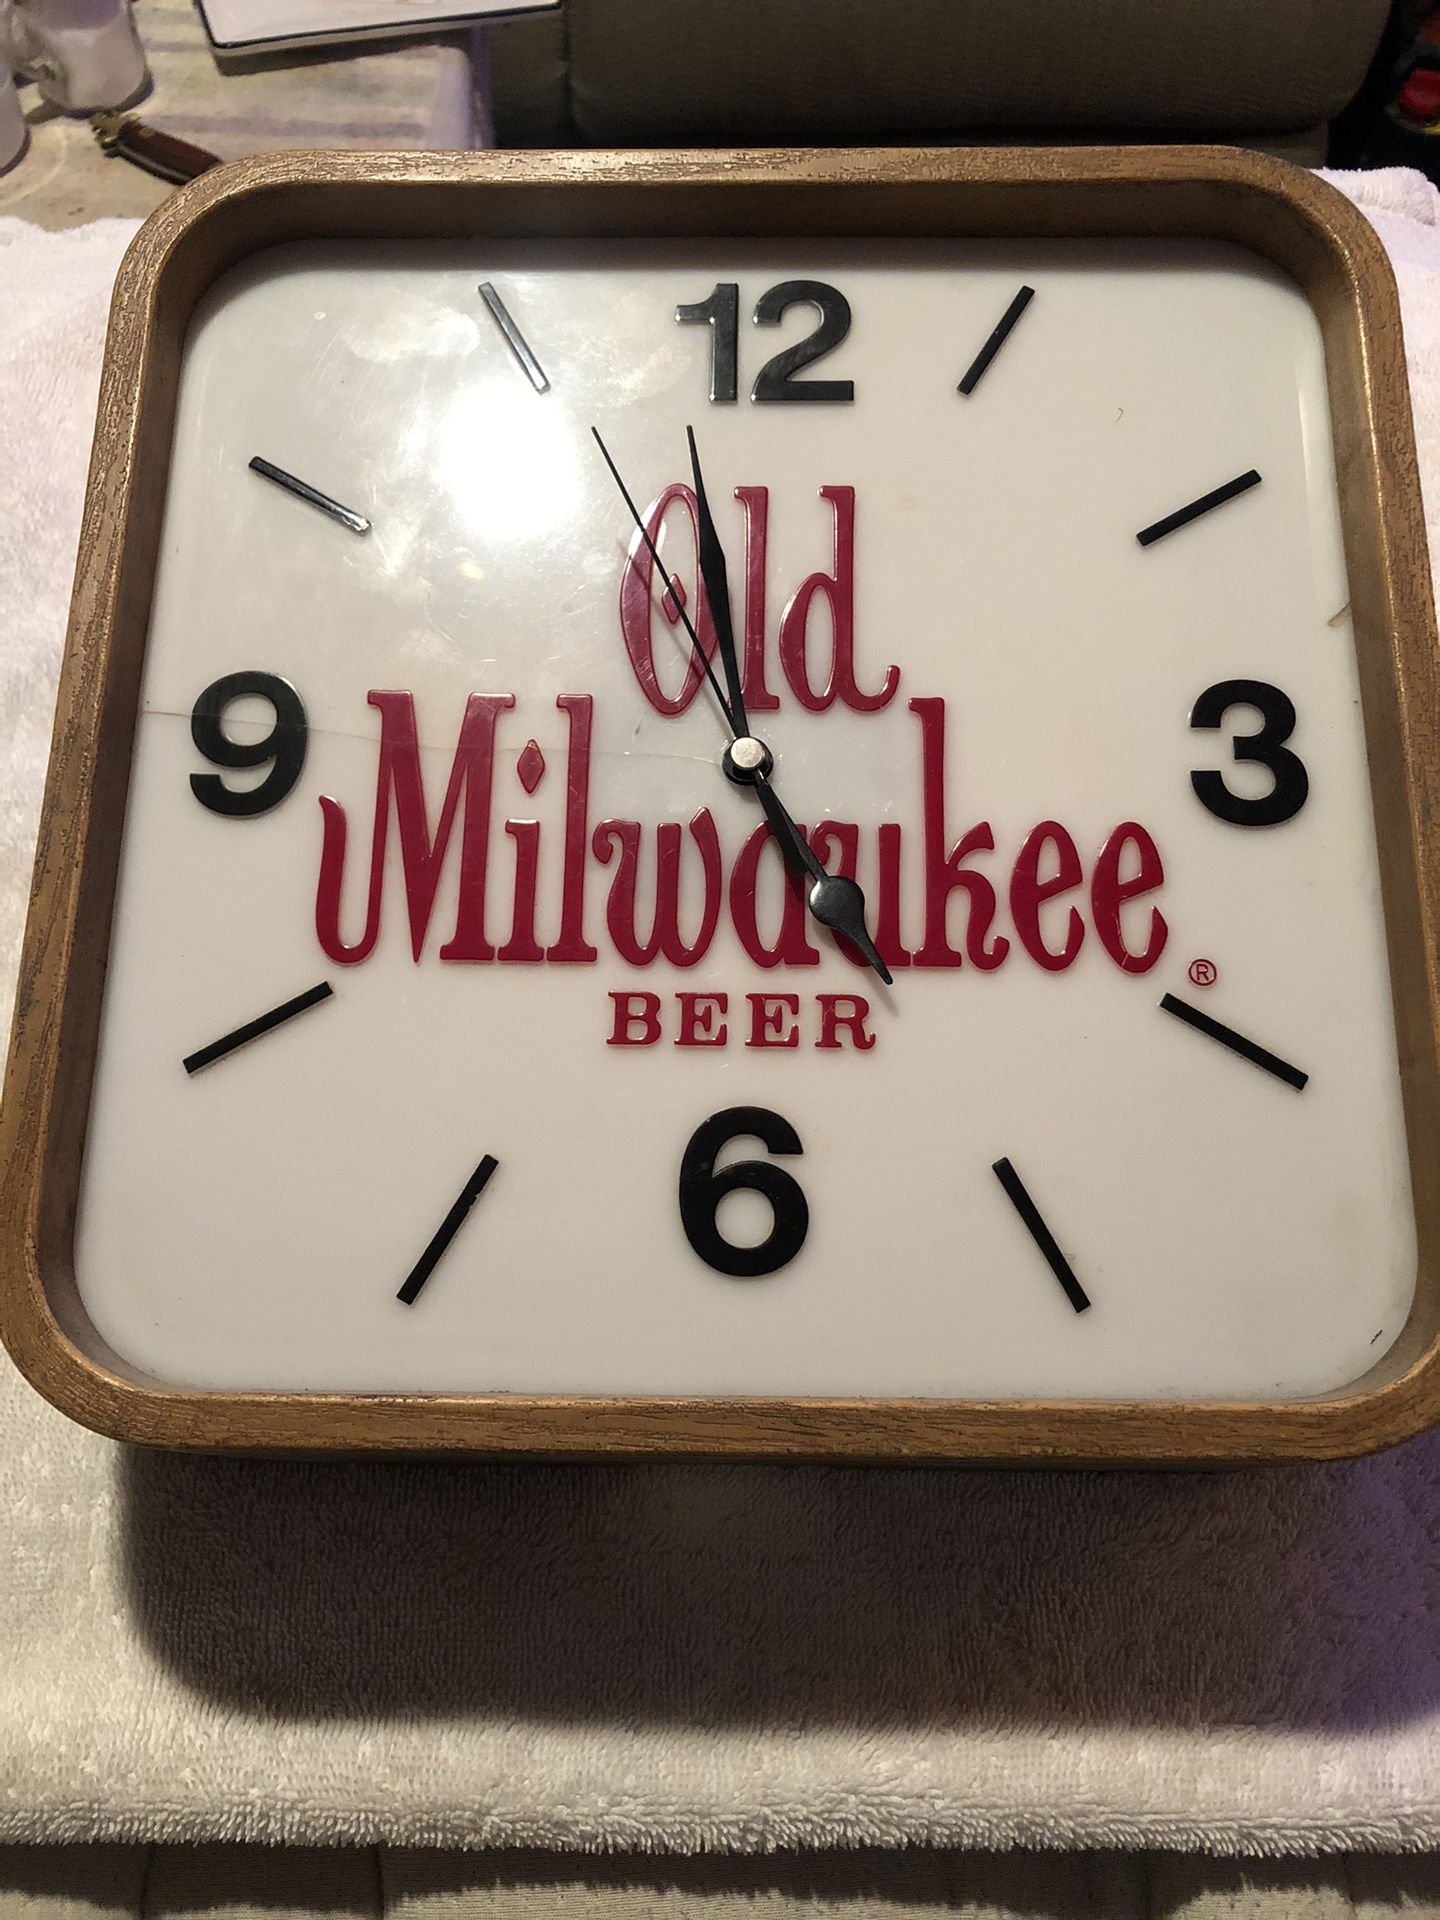 OLD MILWAUKEE CLOCK 